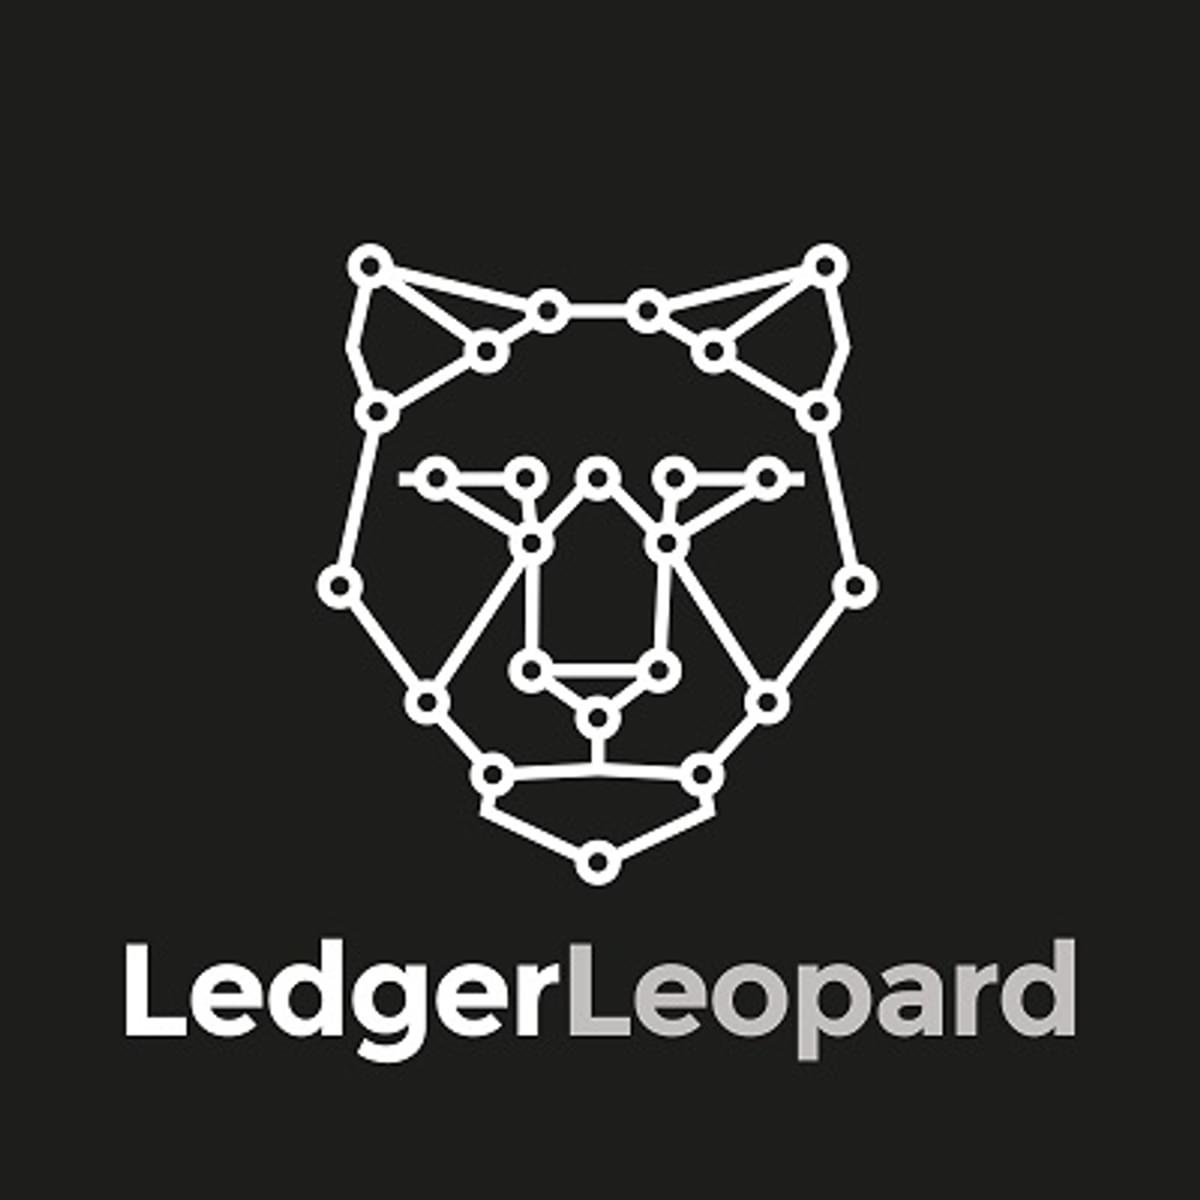 Ledger Leopard koopt Tagologic voor track & trace blockchain toepassingen image